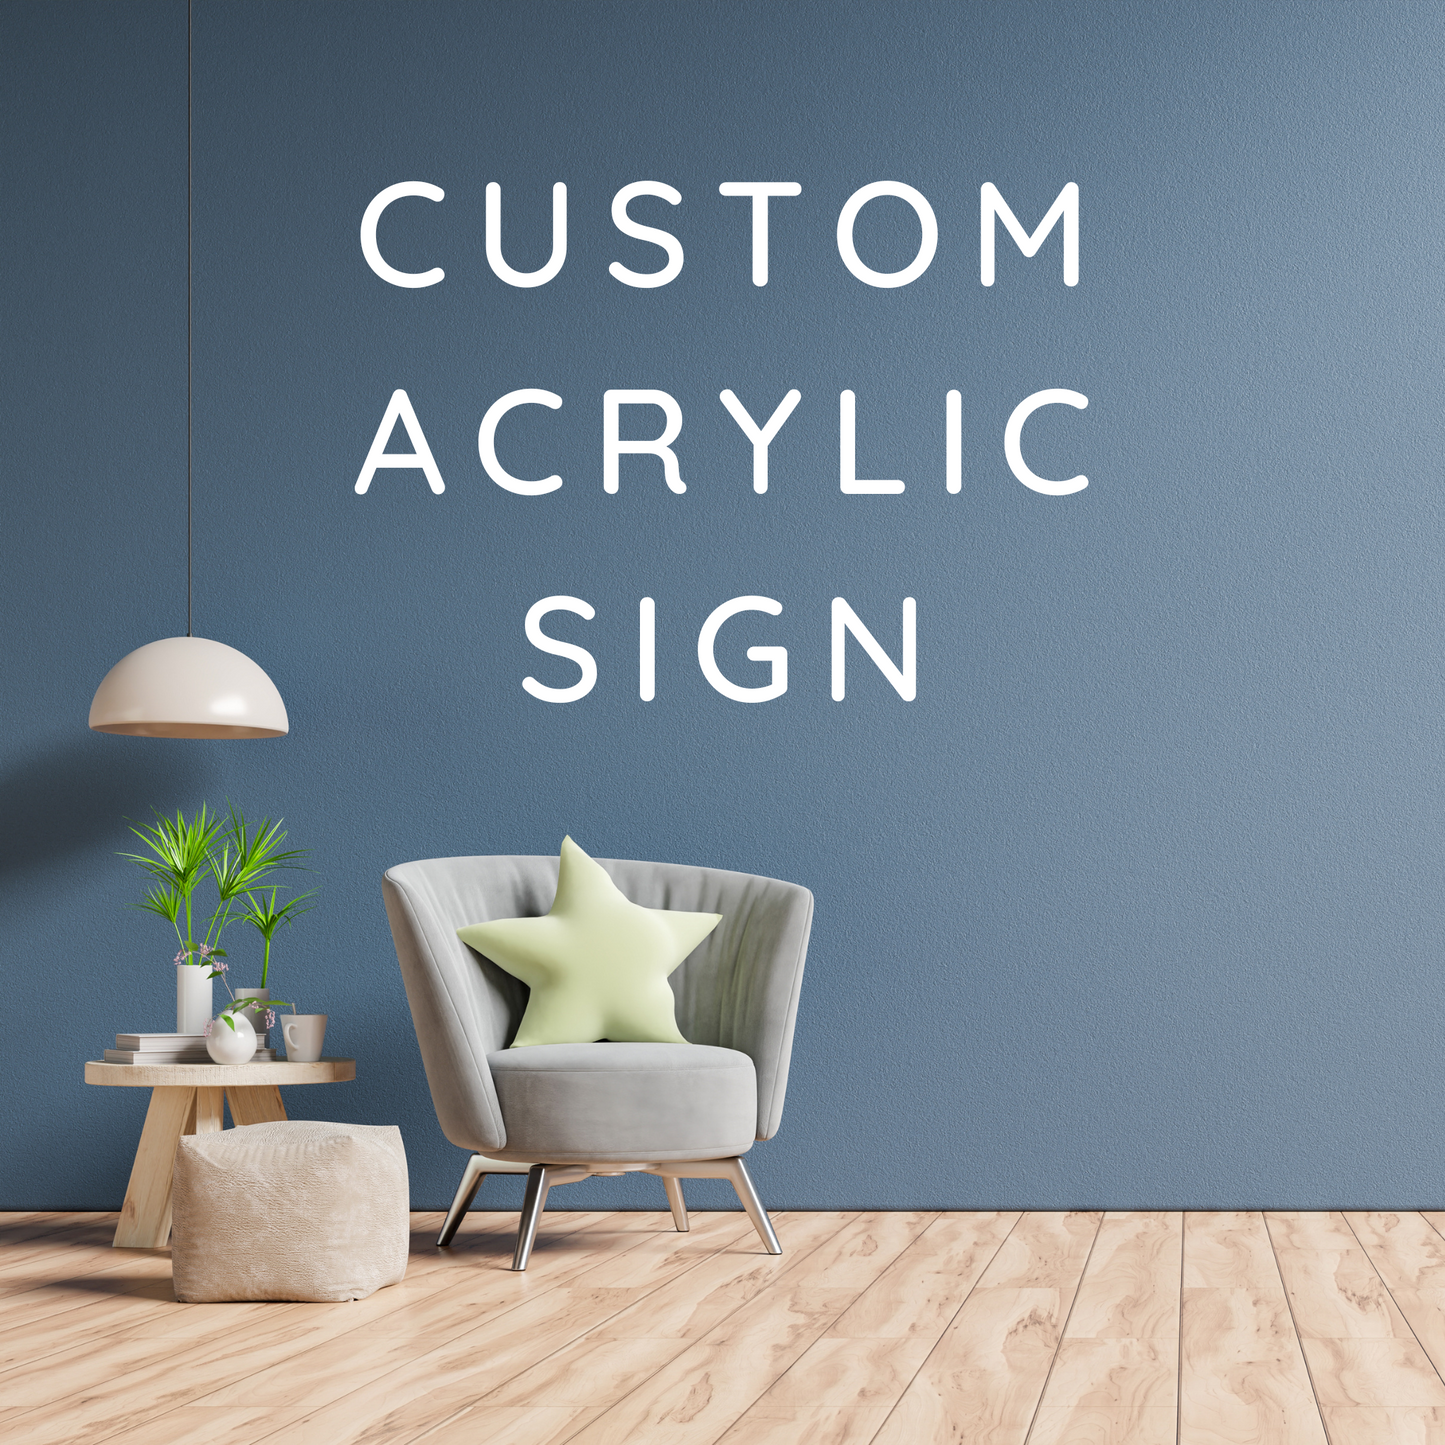 Custom Acrylic Sign - Professional Artwork